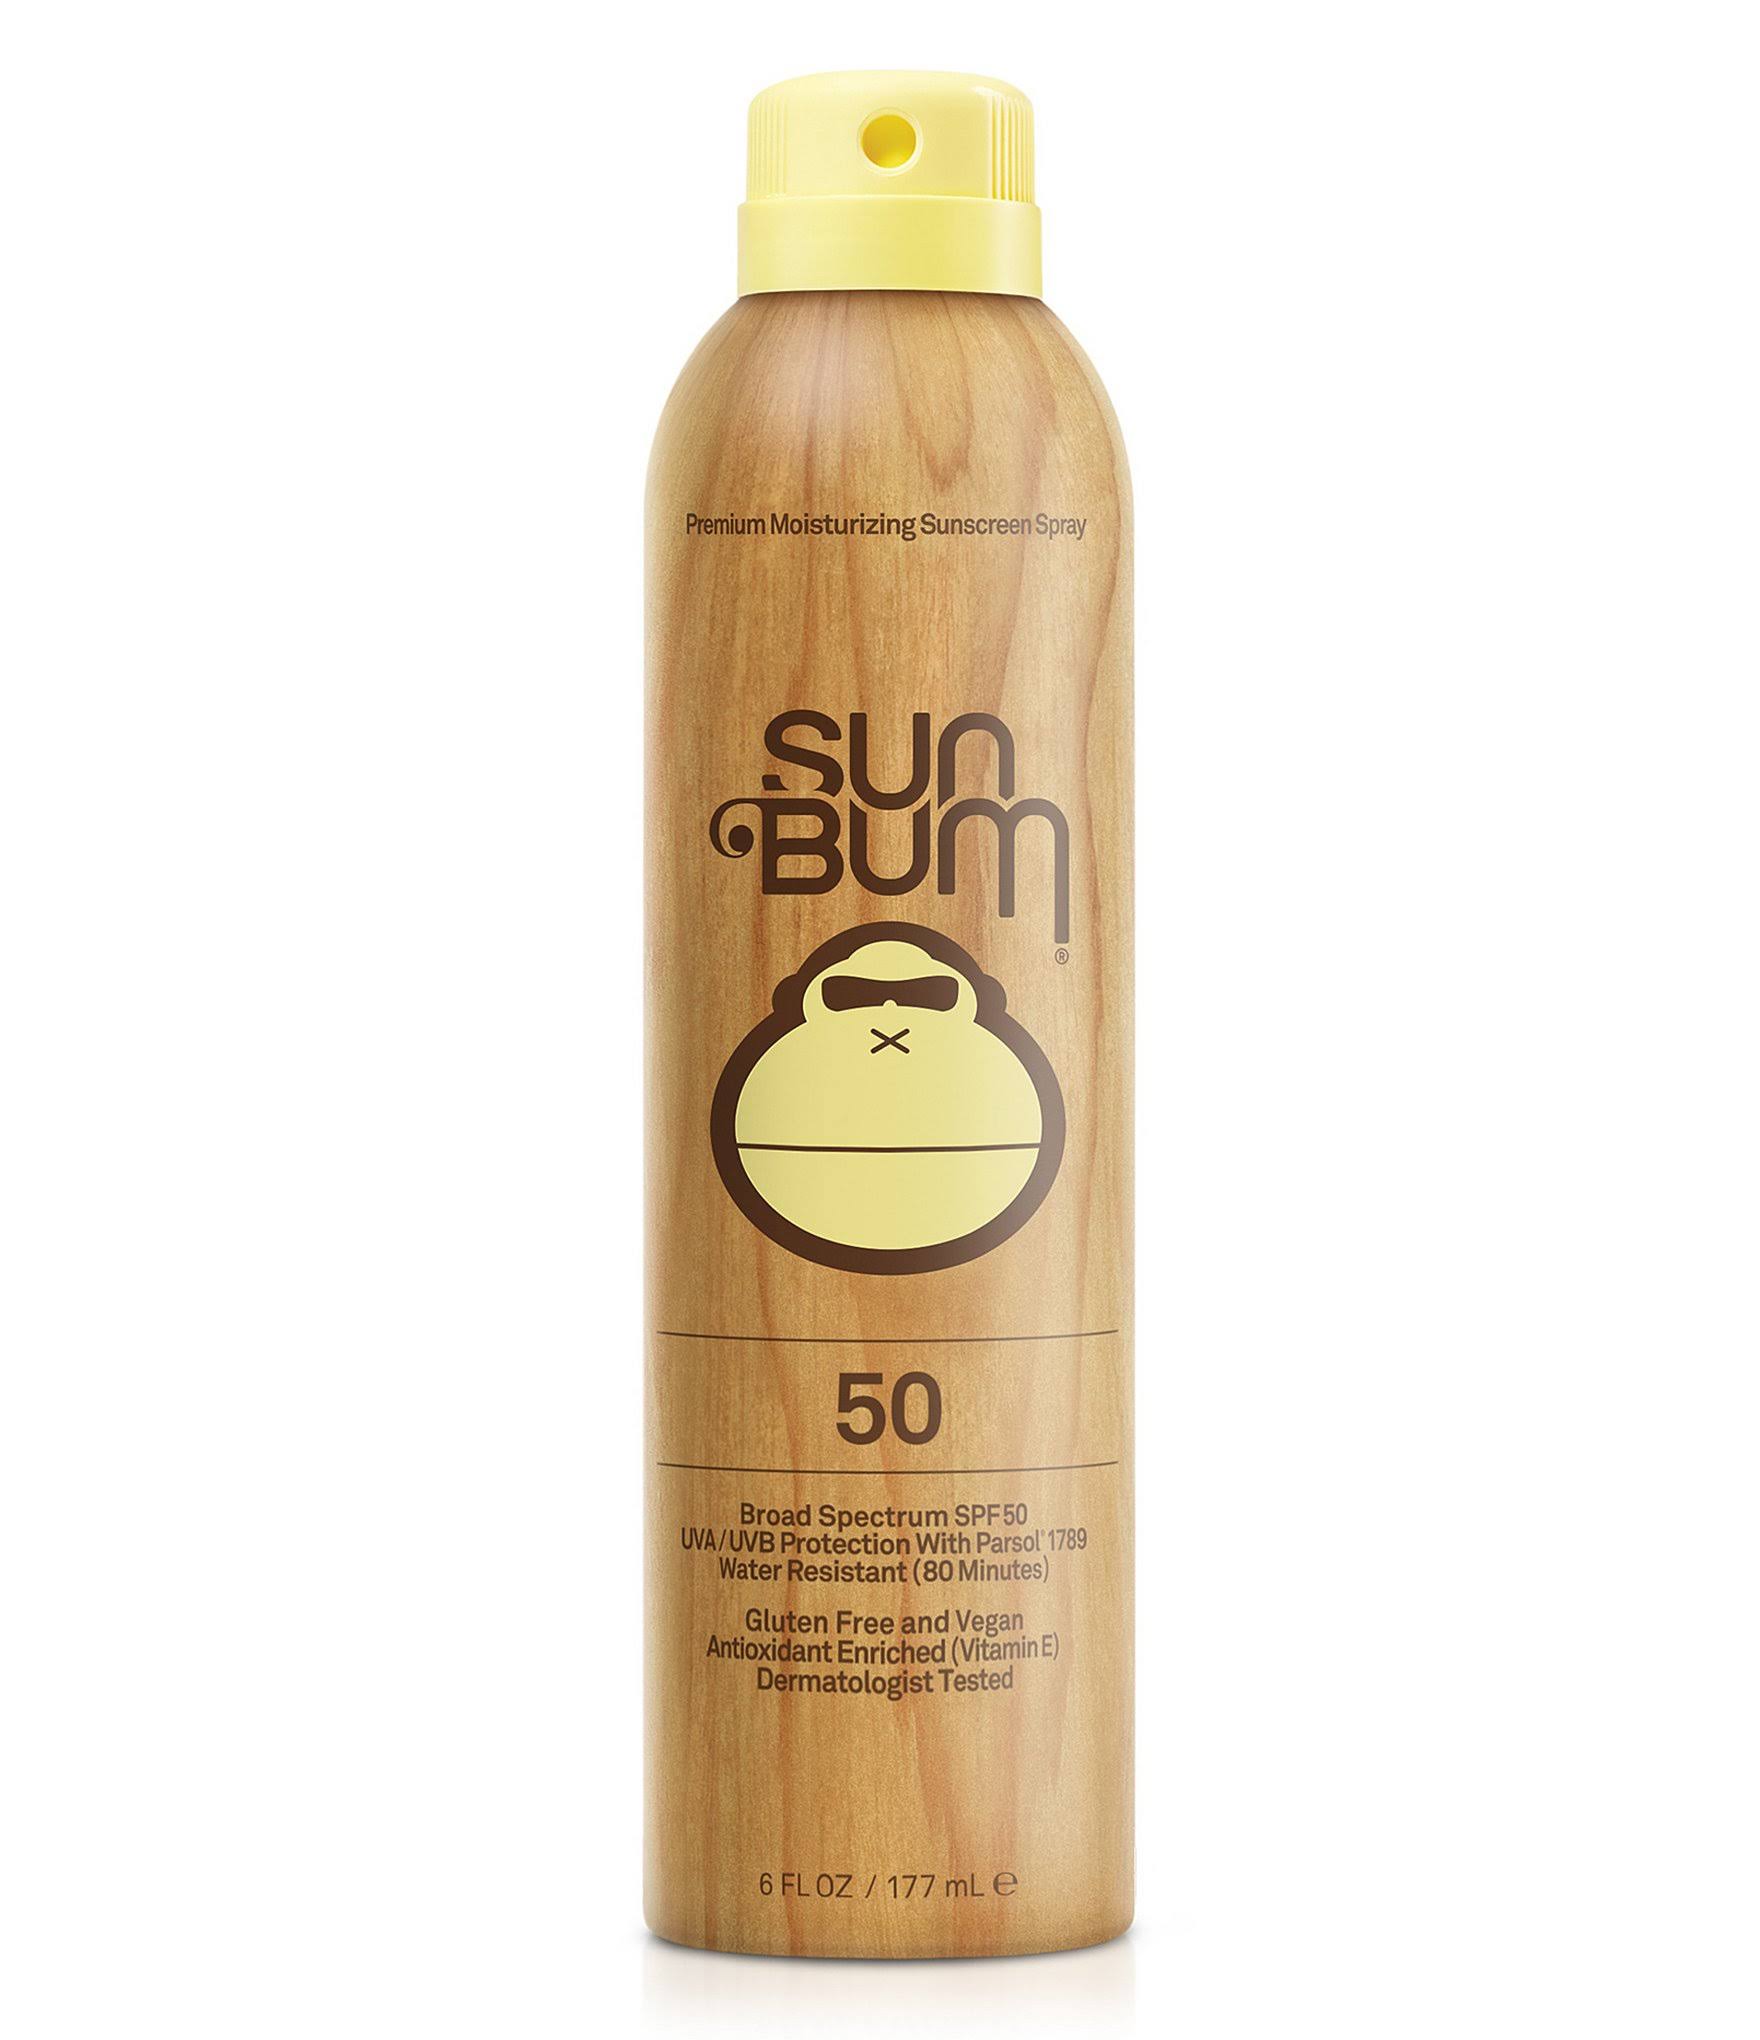 Sun Bum Original Spray Sunscreen - SPF 50, 6oz